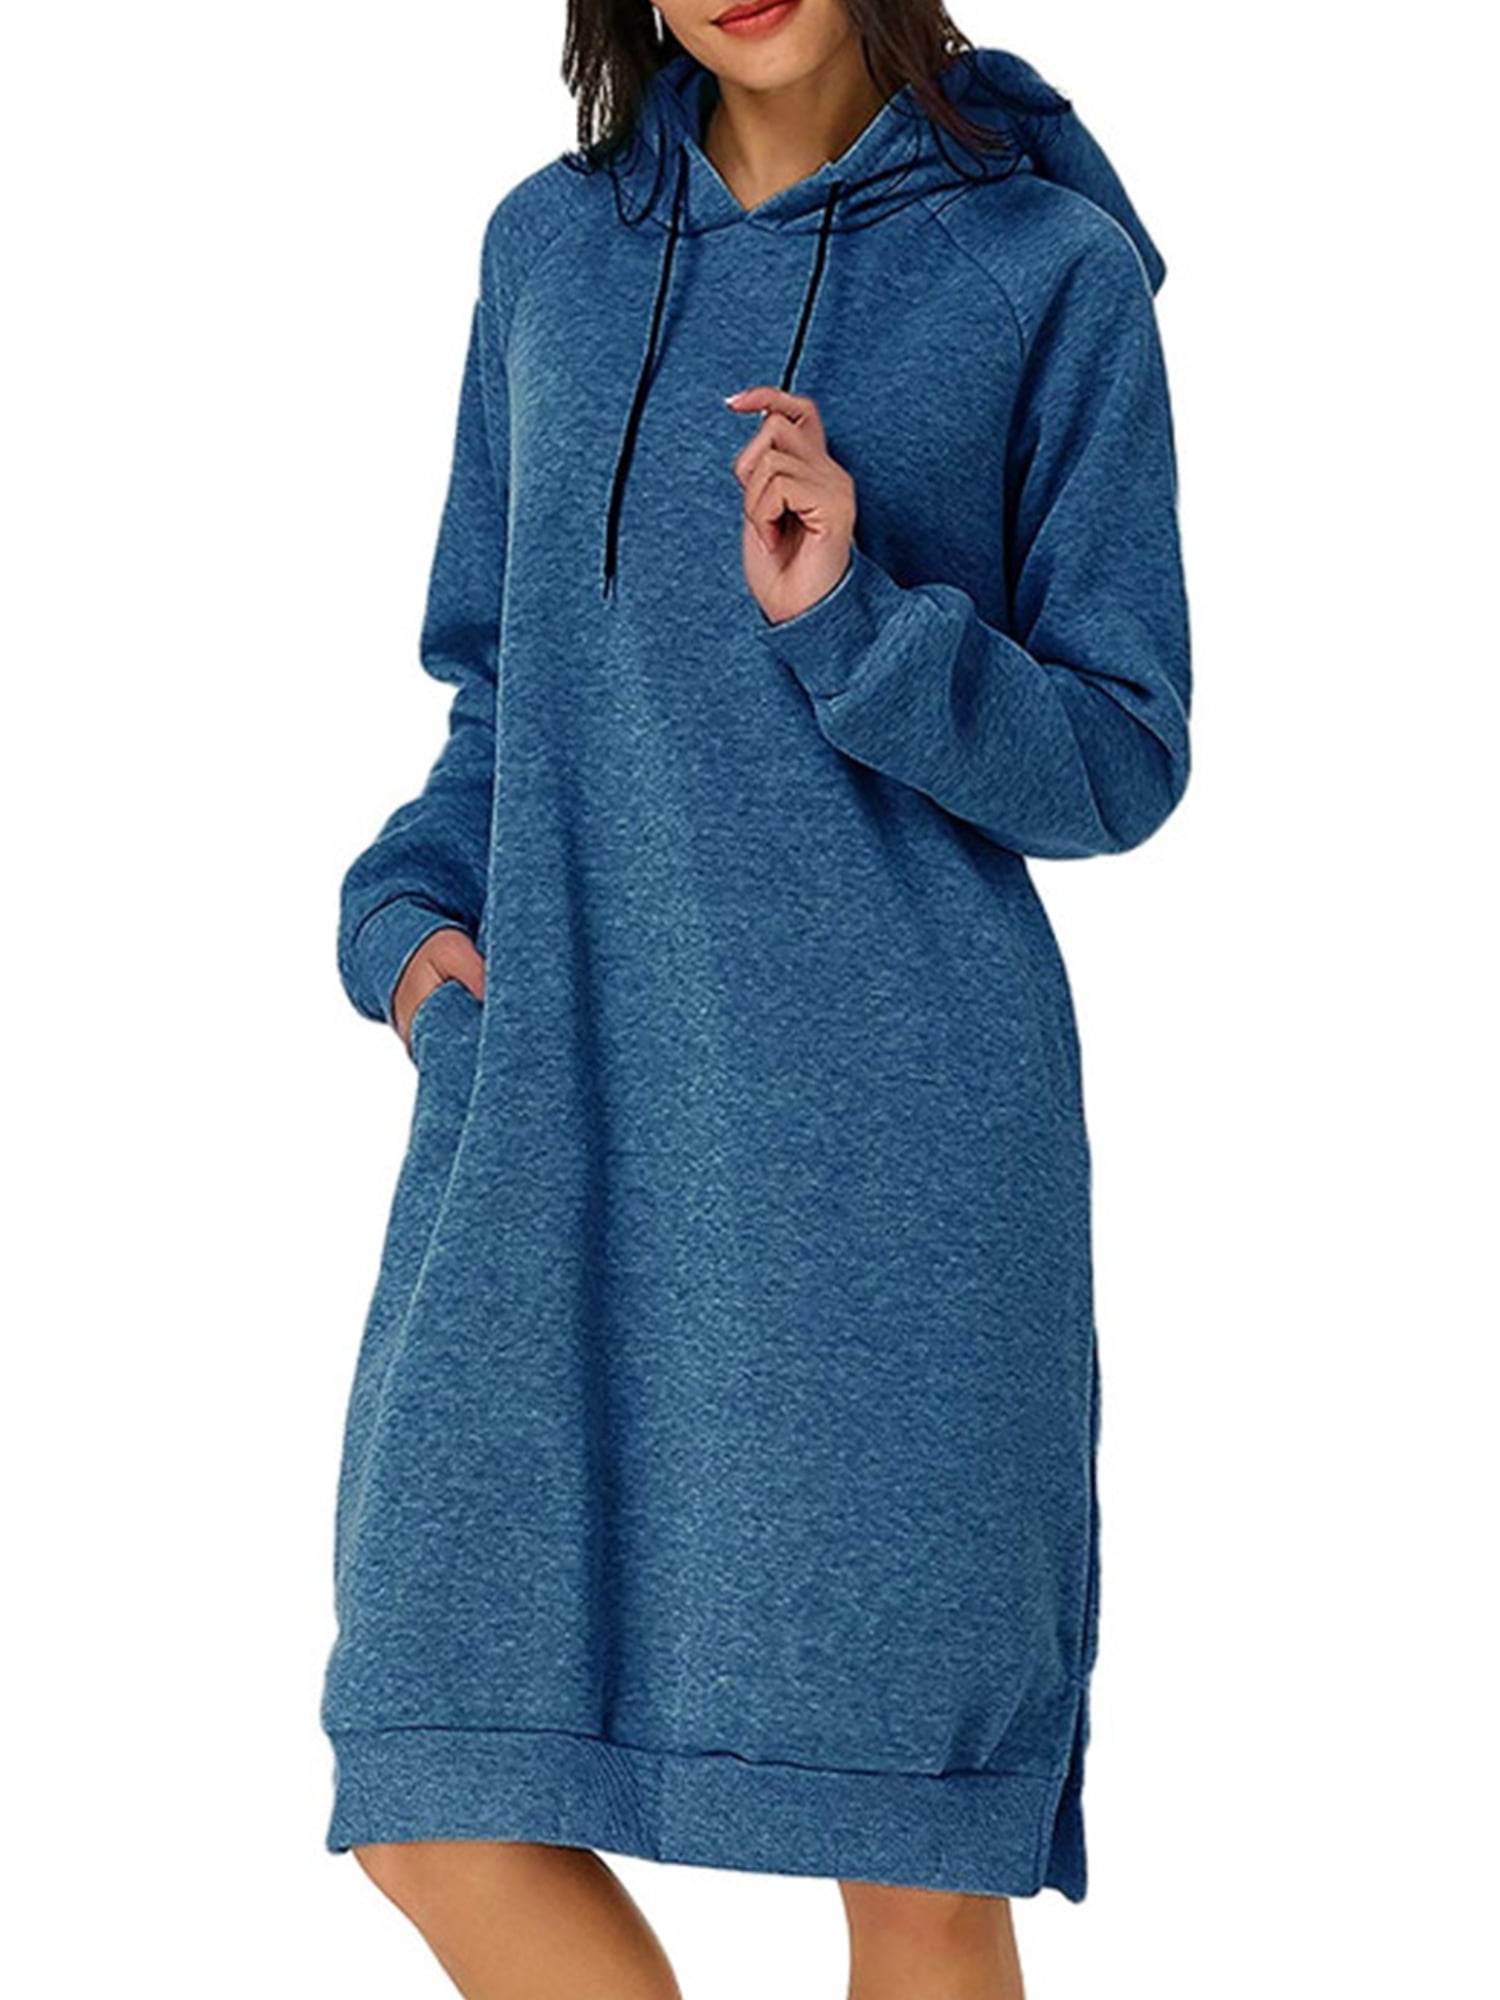 UKAP Long Sleeve Hooded Pockets Tunic Dress For Ladies Pullover Hoodie ...